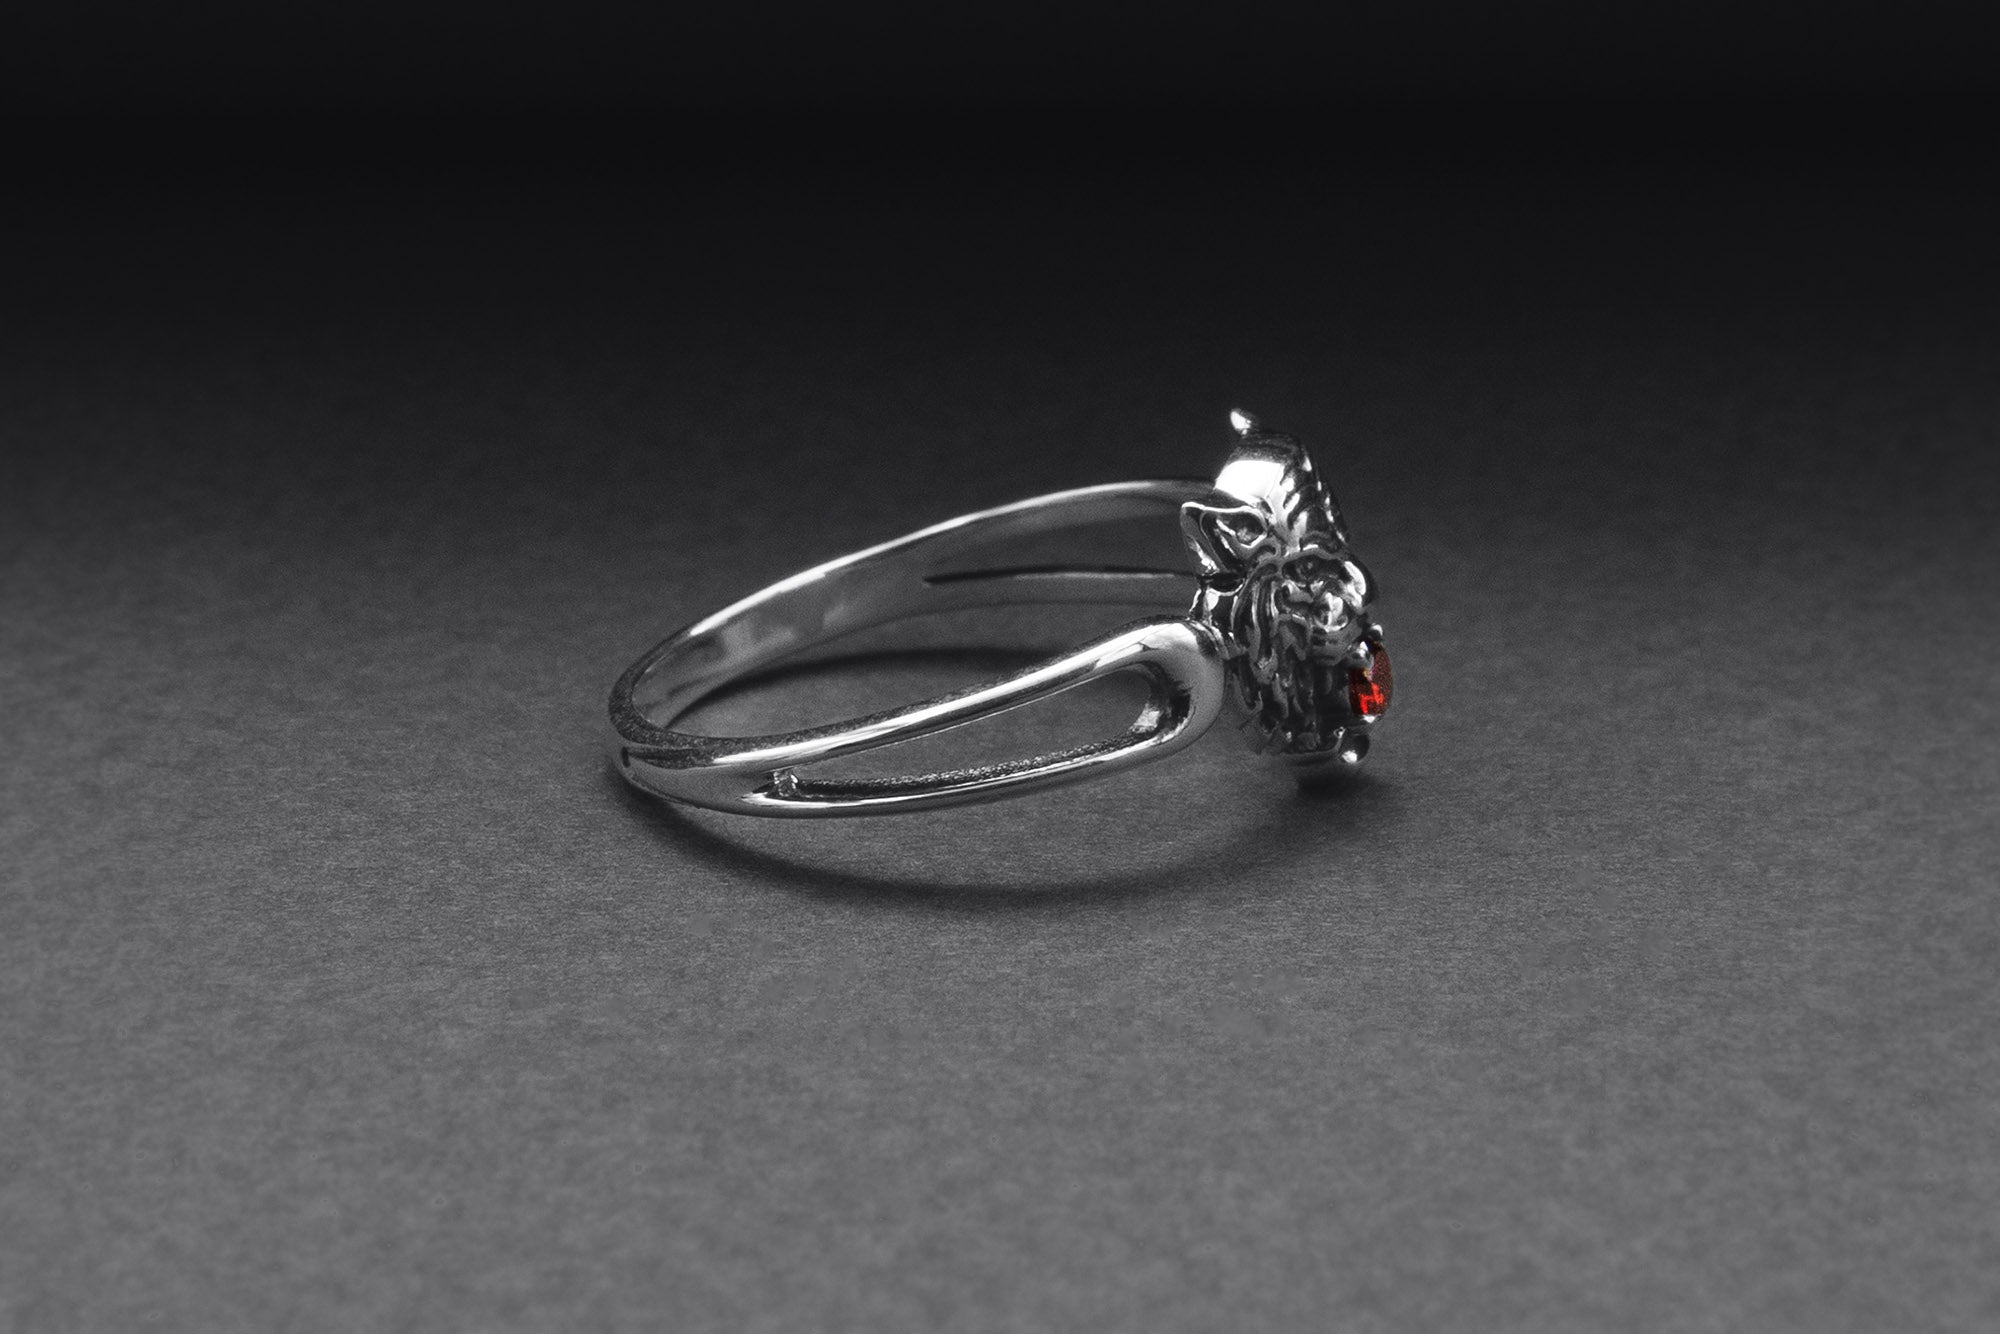 925 Silver Tiger Ring with Red Gem, Handmade Animal Jewelry - vikingworkshop